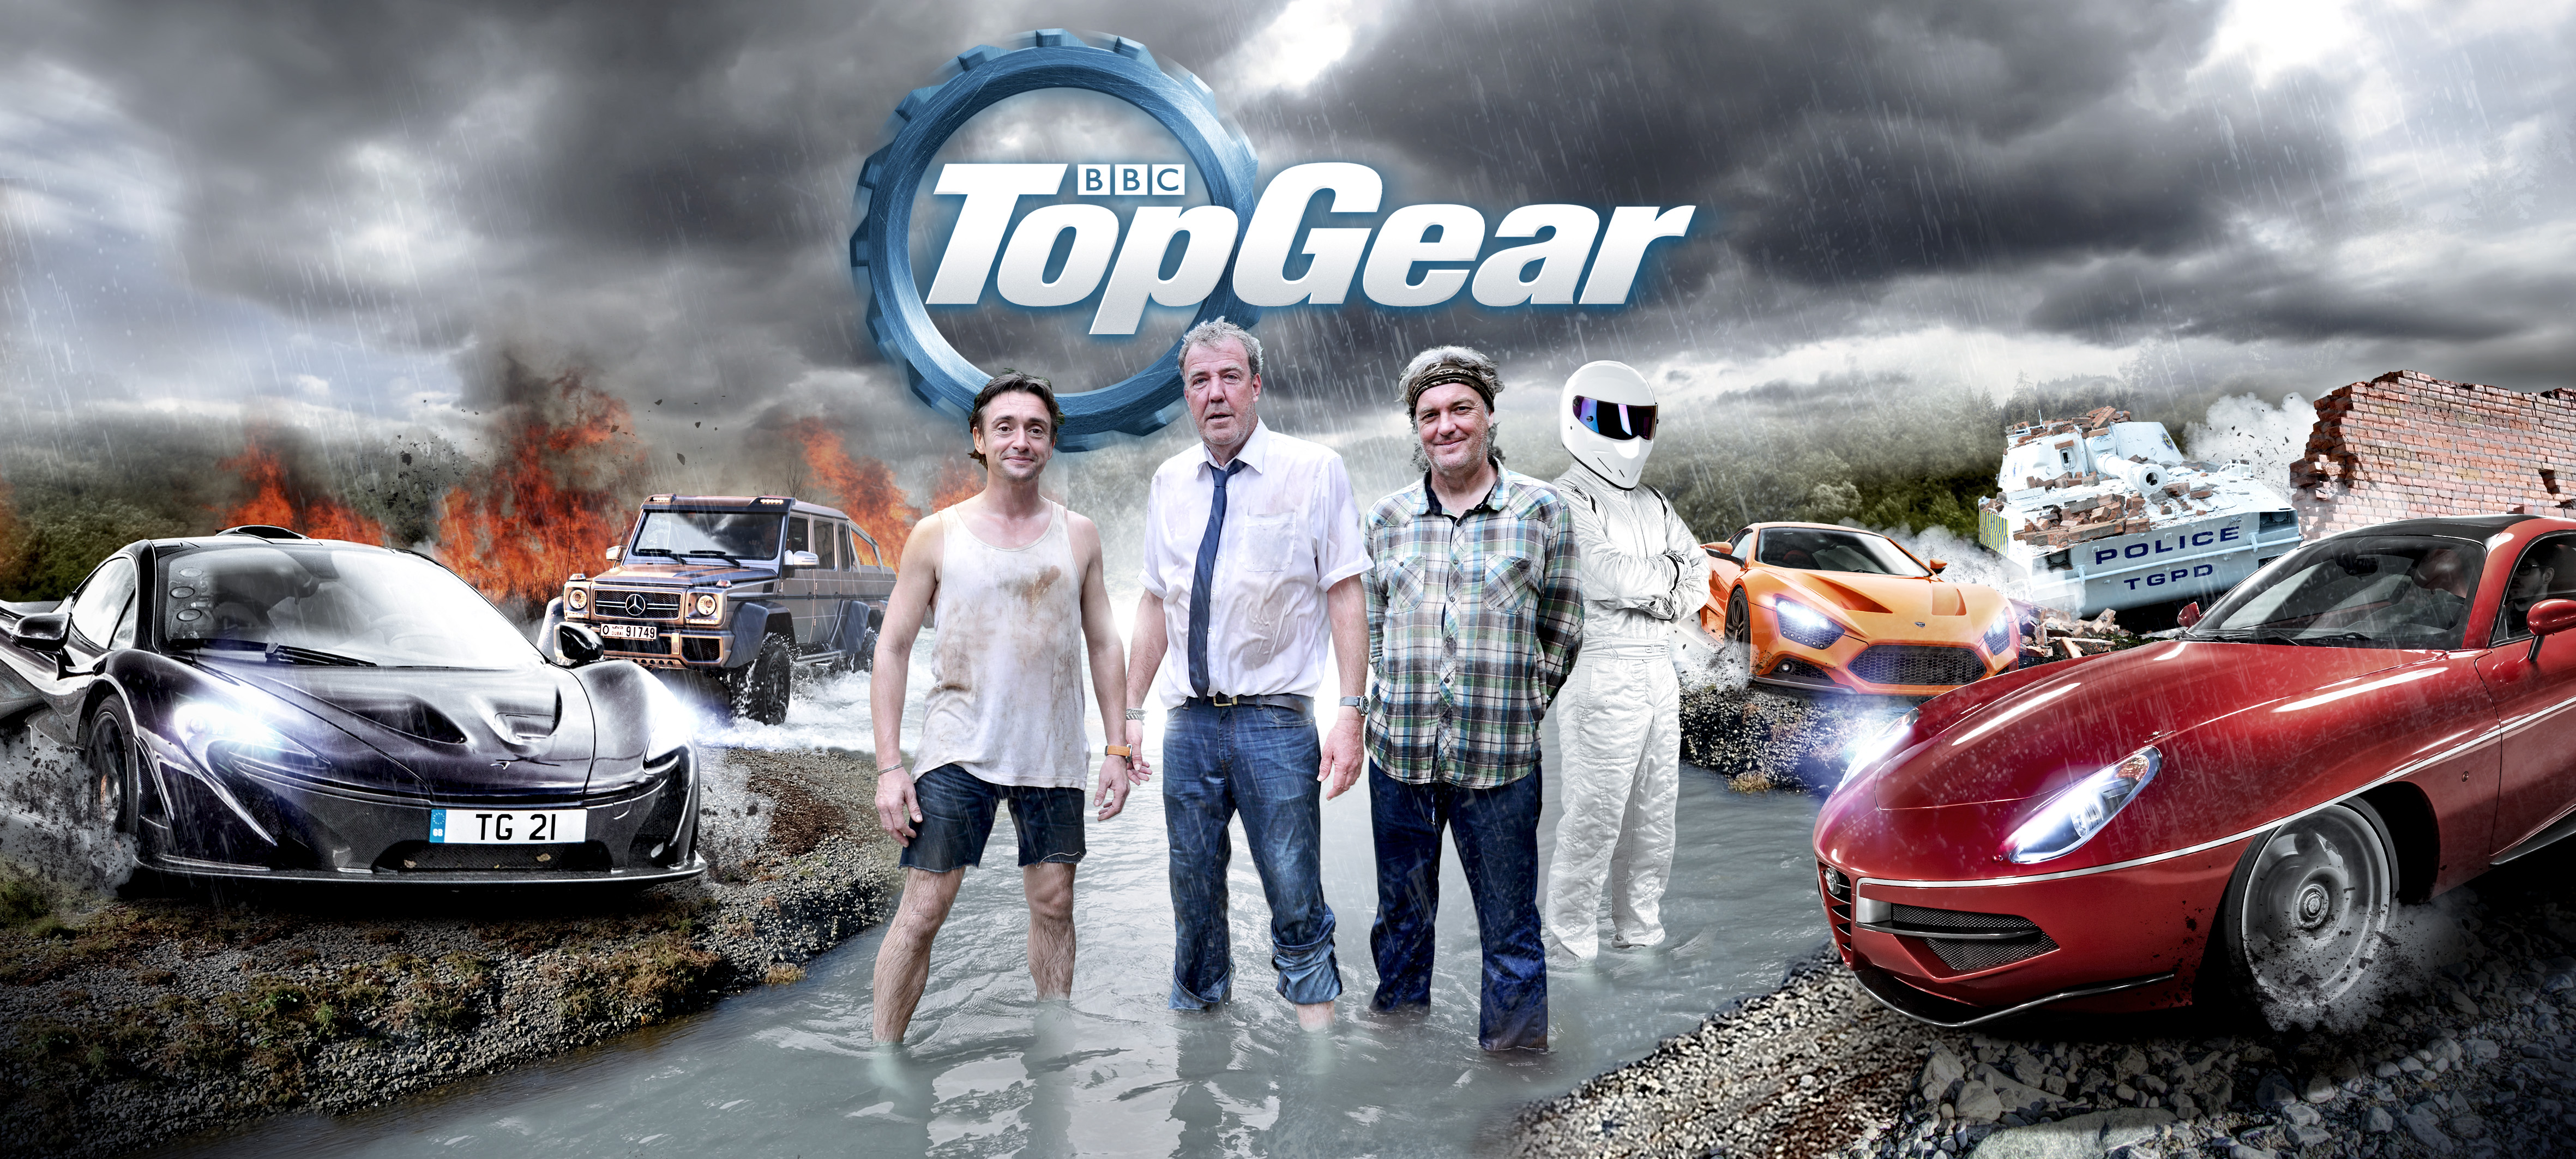 Top Gear Series 21 gets some extra flashy key art. (Photo: BBC Worldwide)